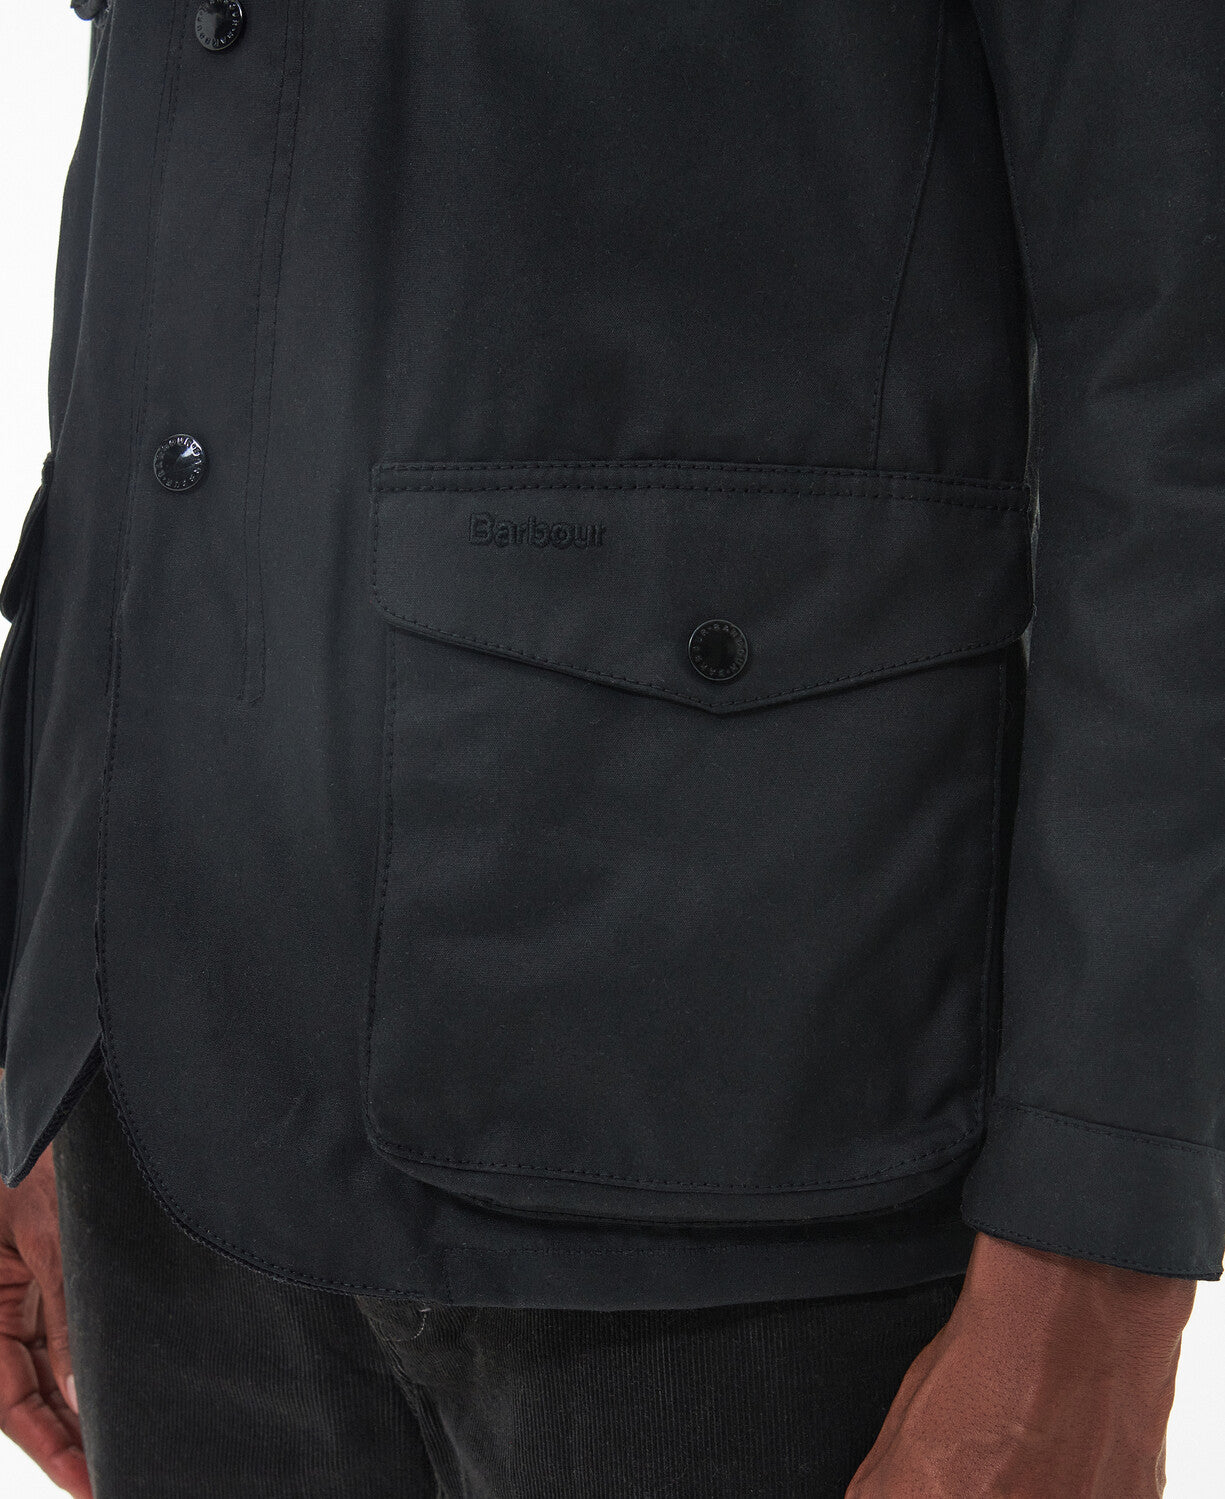 Men's Barbour Ogston Wax Jacket | Olive | Size Medium | Waxed Cotton